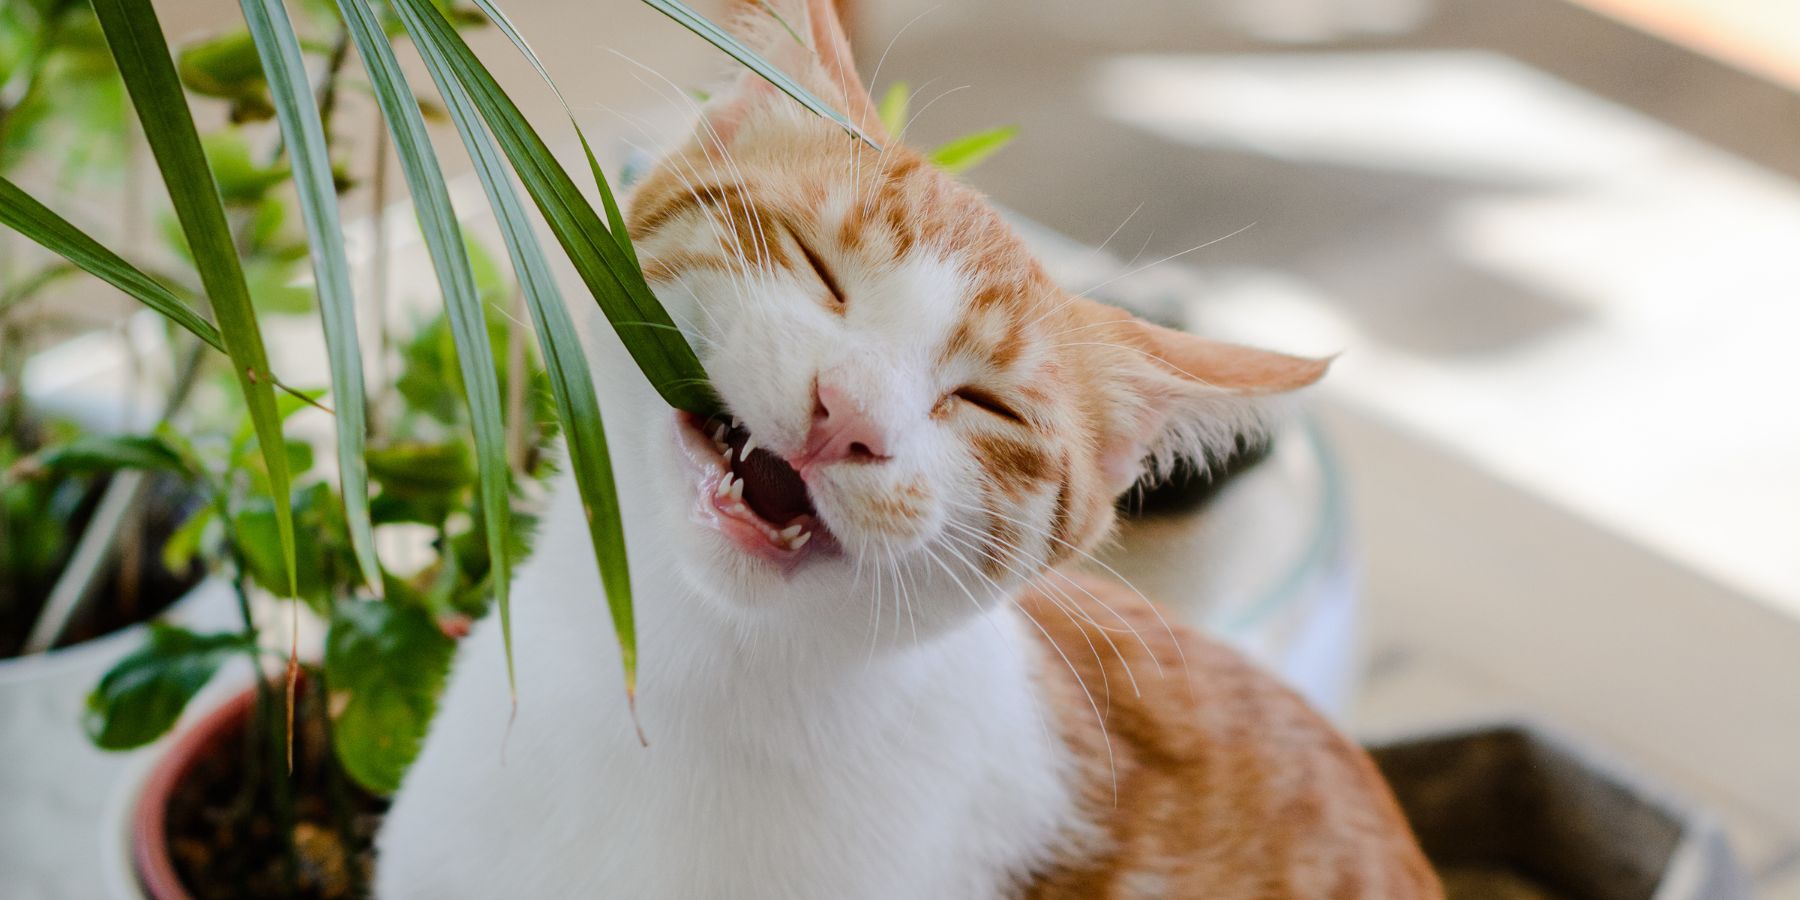 What Happens If My Cat Eats a Toxic Plant?